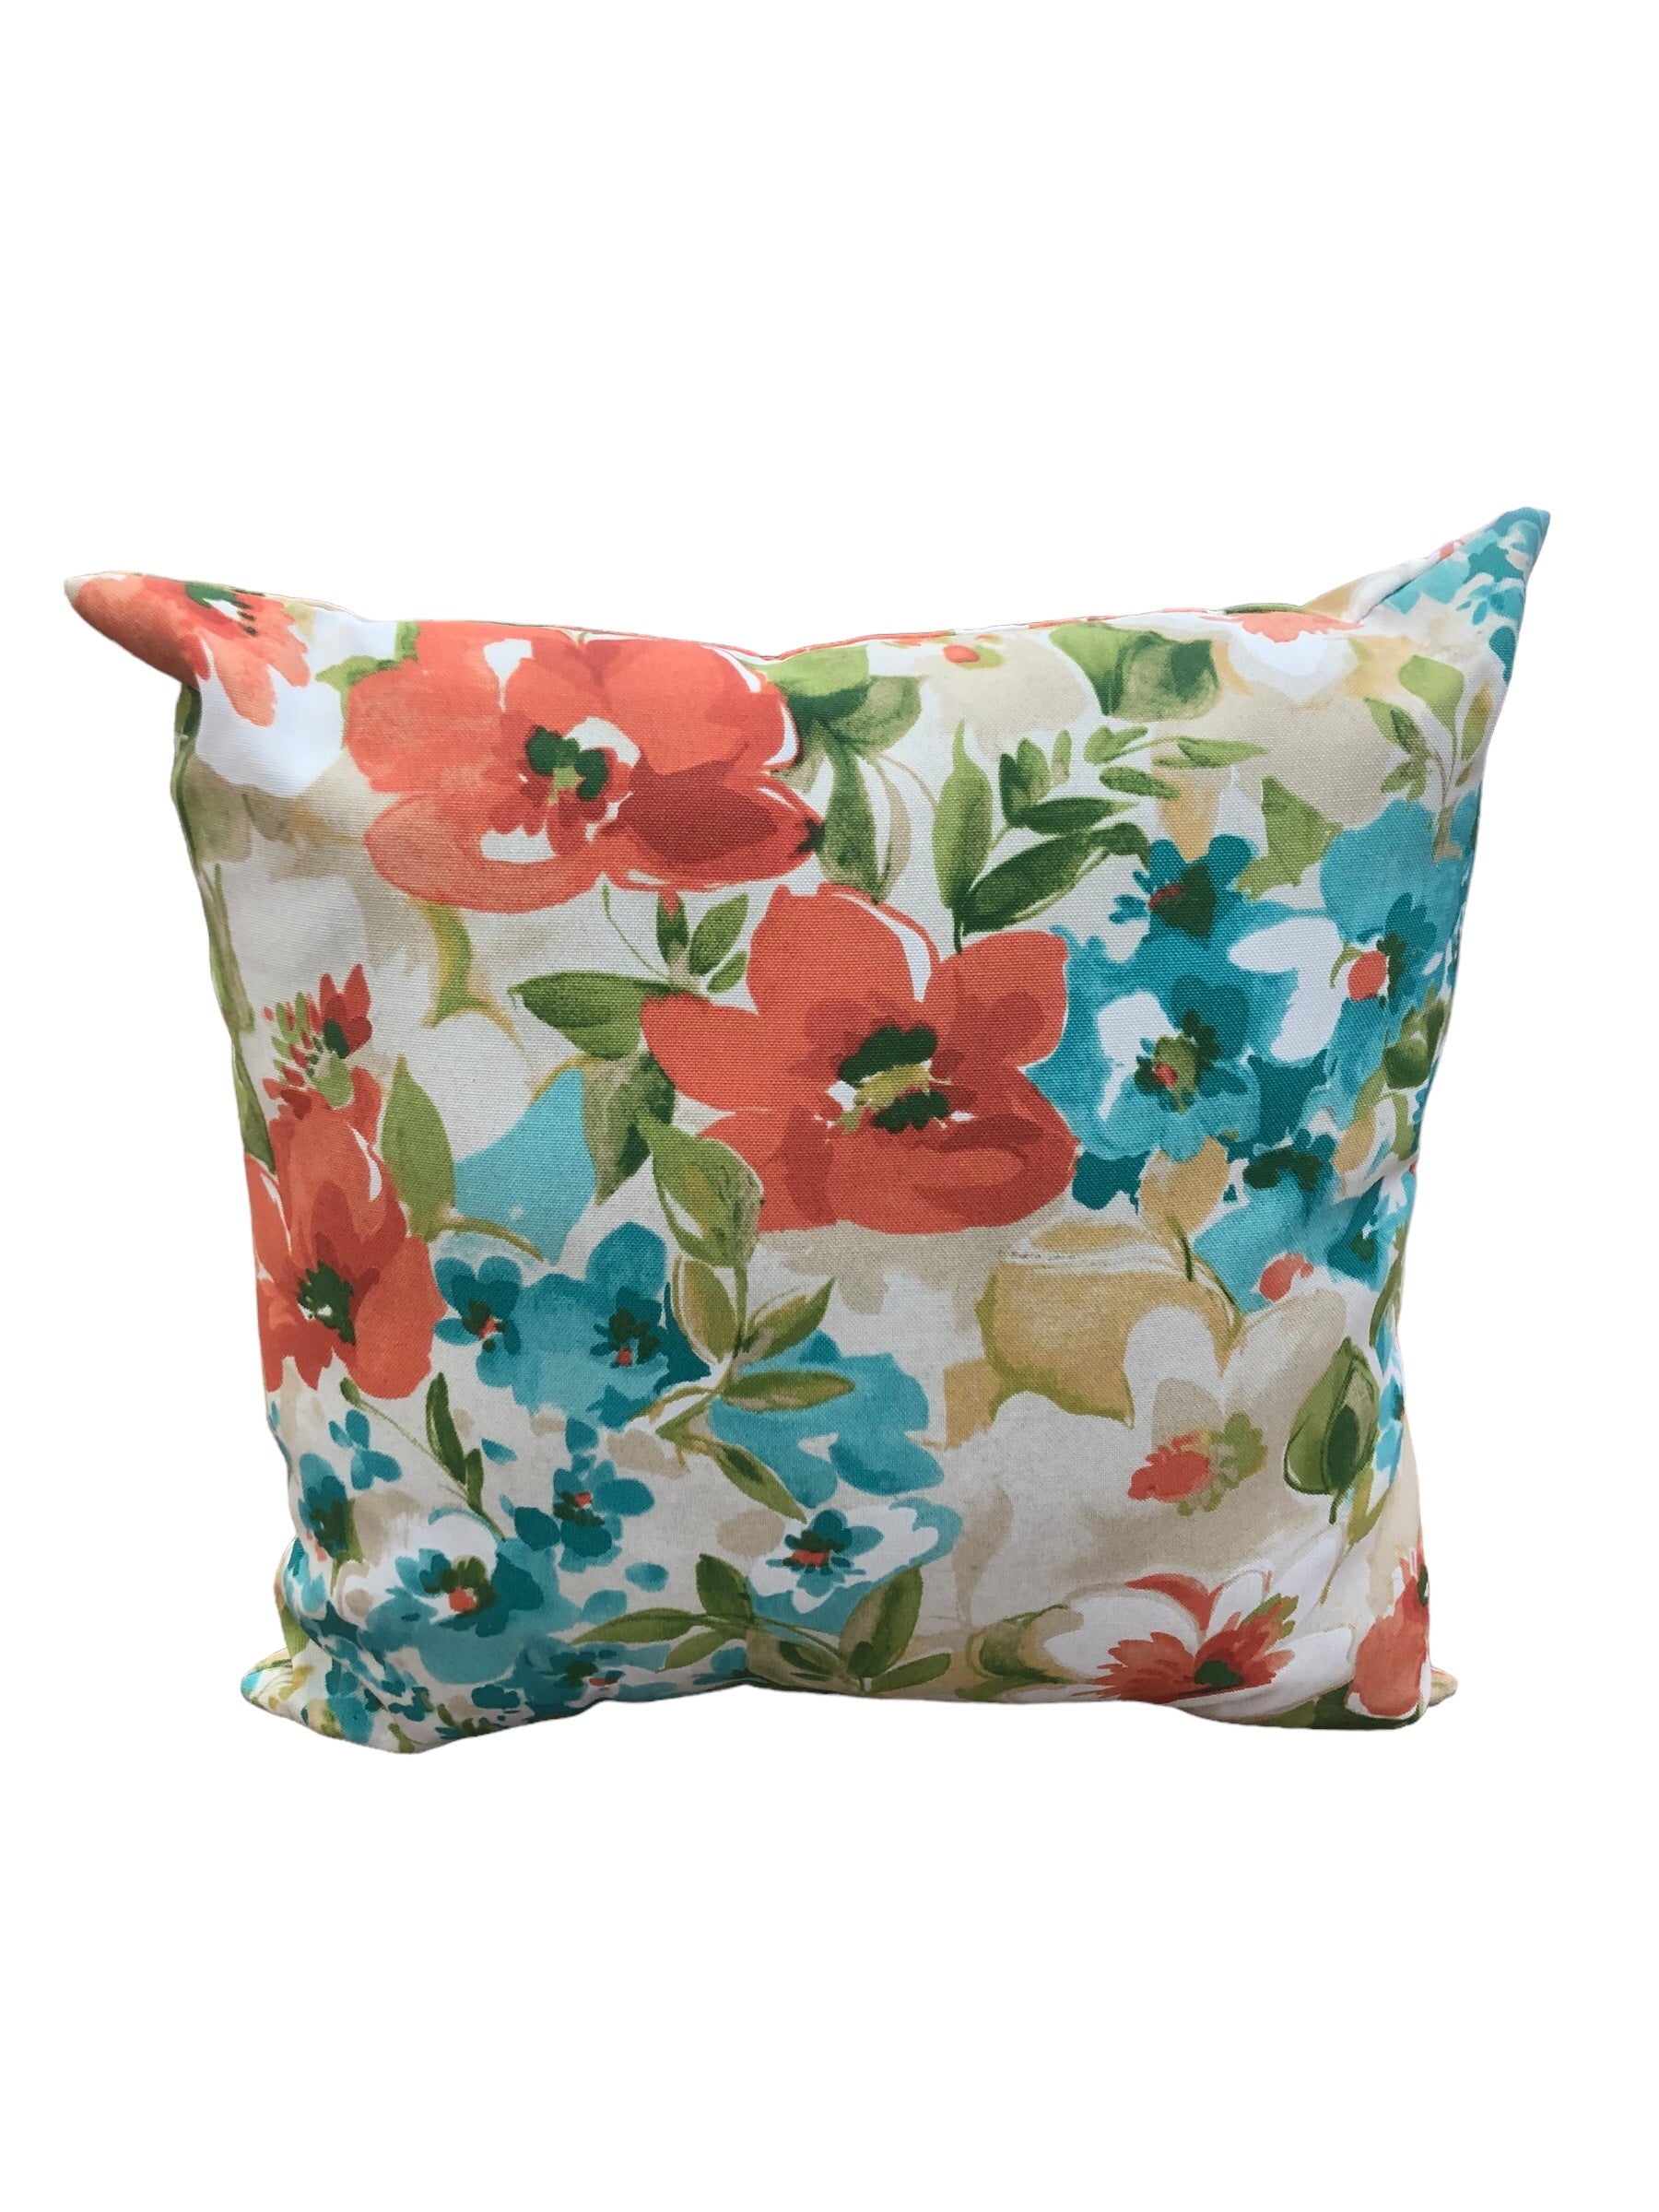 Floral Pillow Turq/Beige/Orange/Green